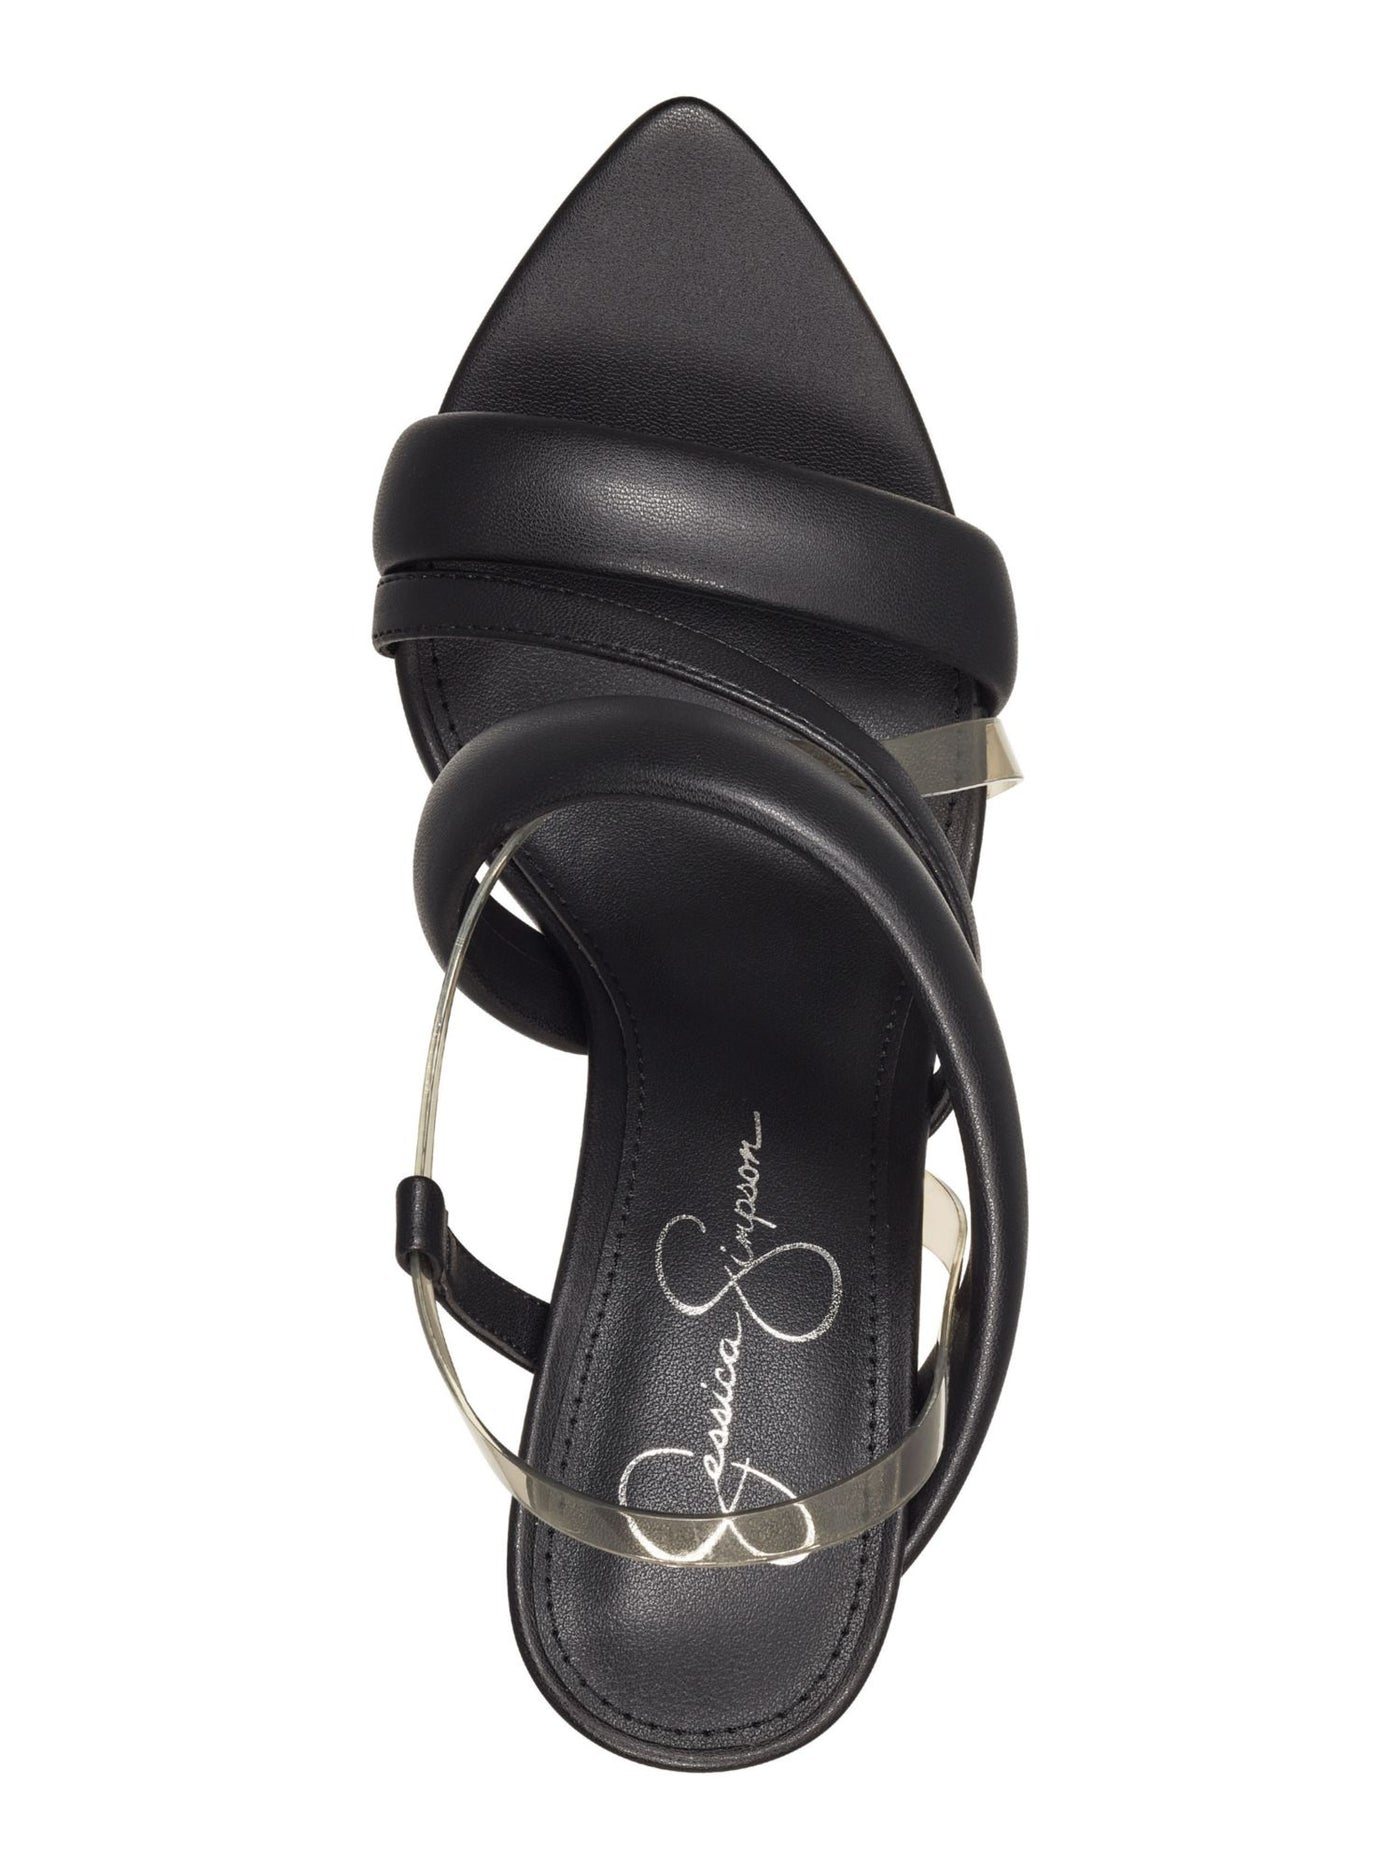 JESSICA SIMPSON Womens Black Transparent Asymmetrical Strappy Krissta Pointed Toe Stiletto Slip On Slingback Sandal 7.5 M